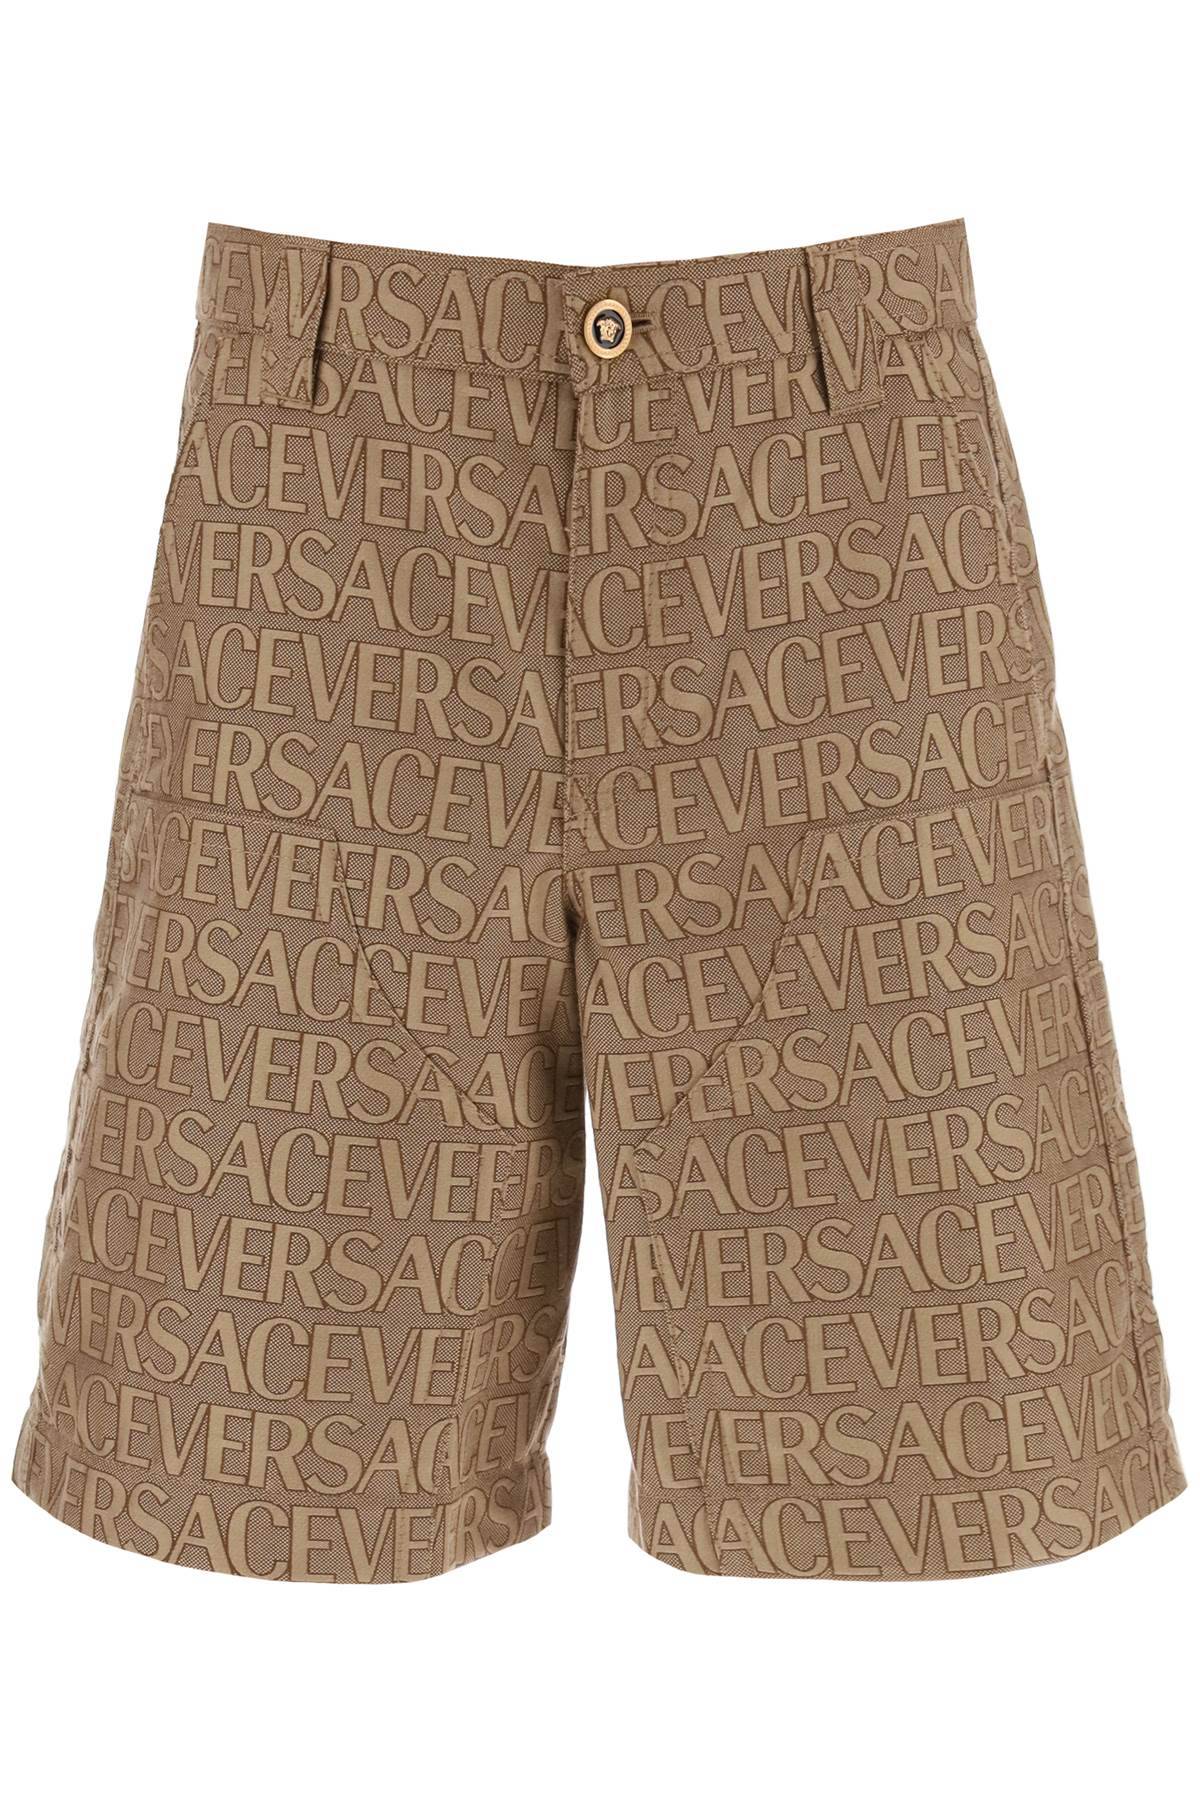 Versace VERSACE versace allover shorts